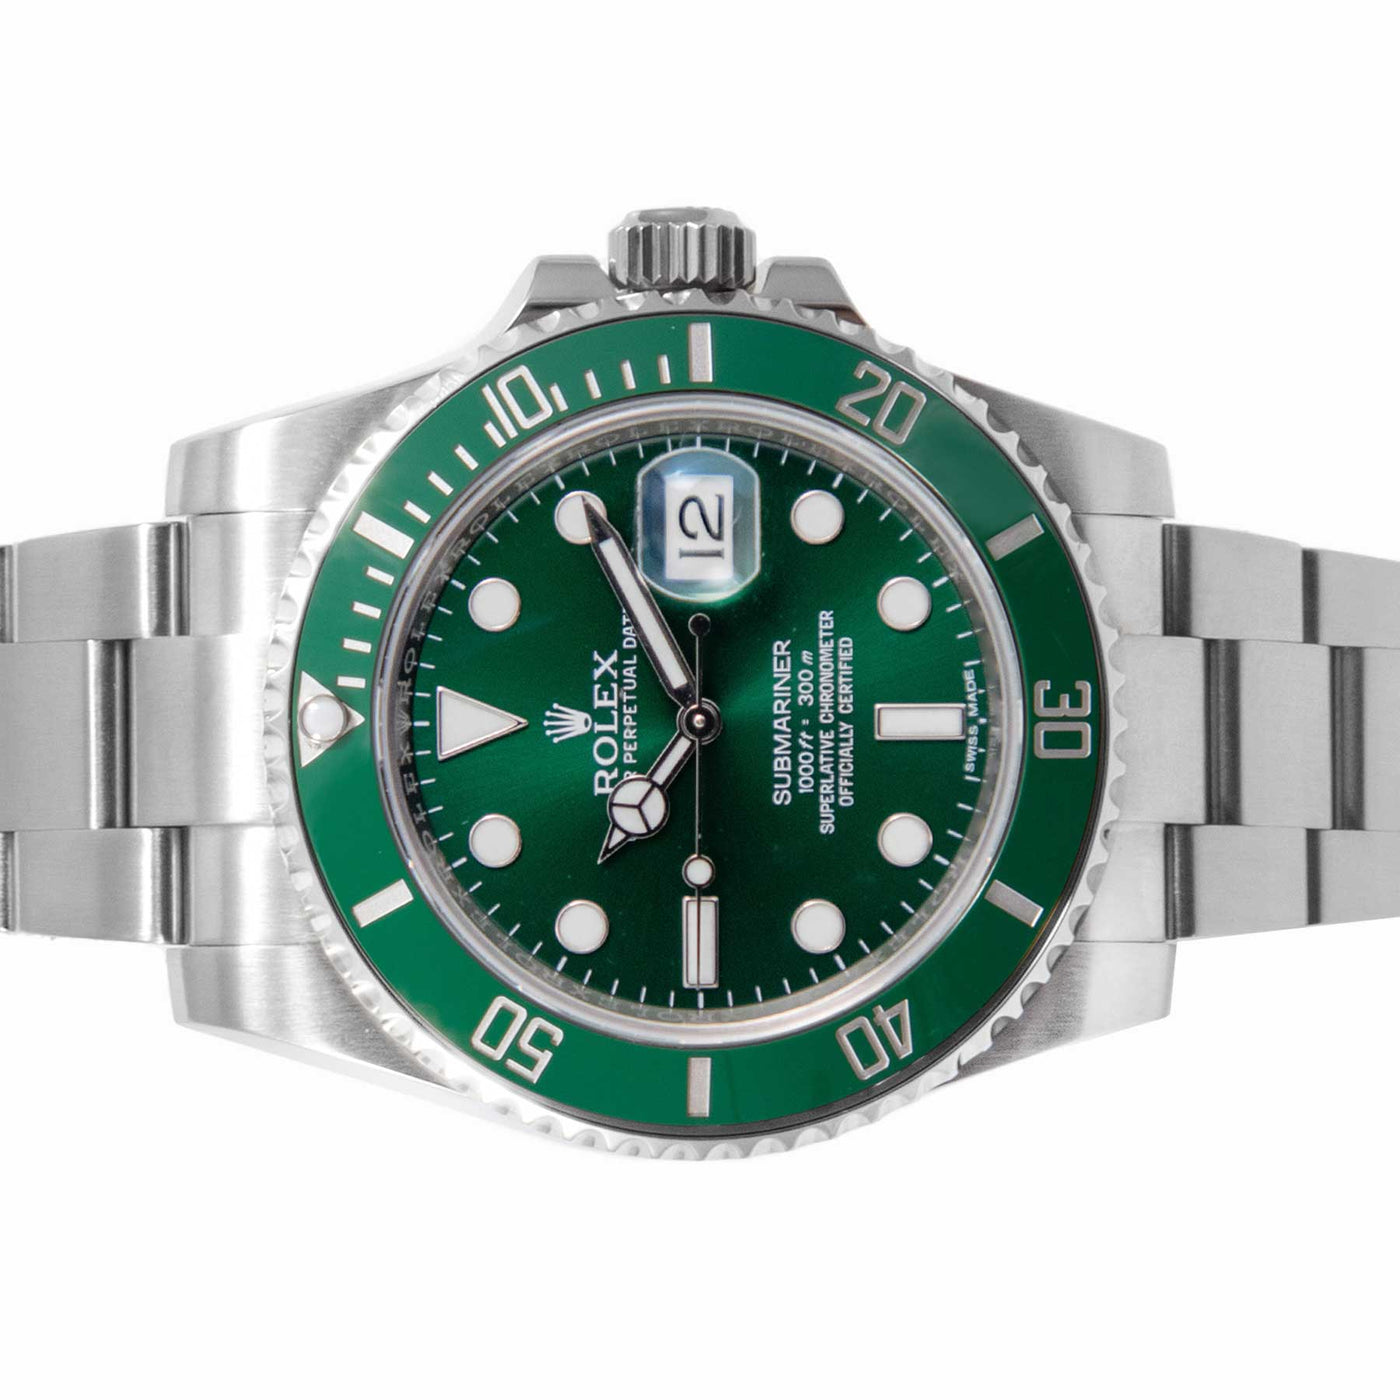 Submariner "Hulk"-Timepiece360